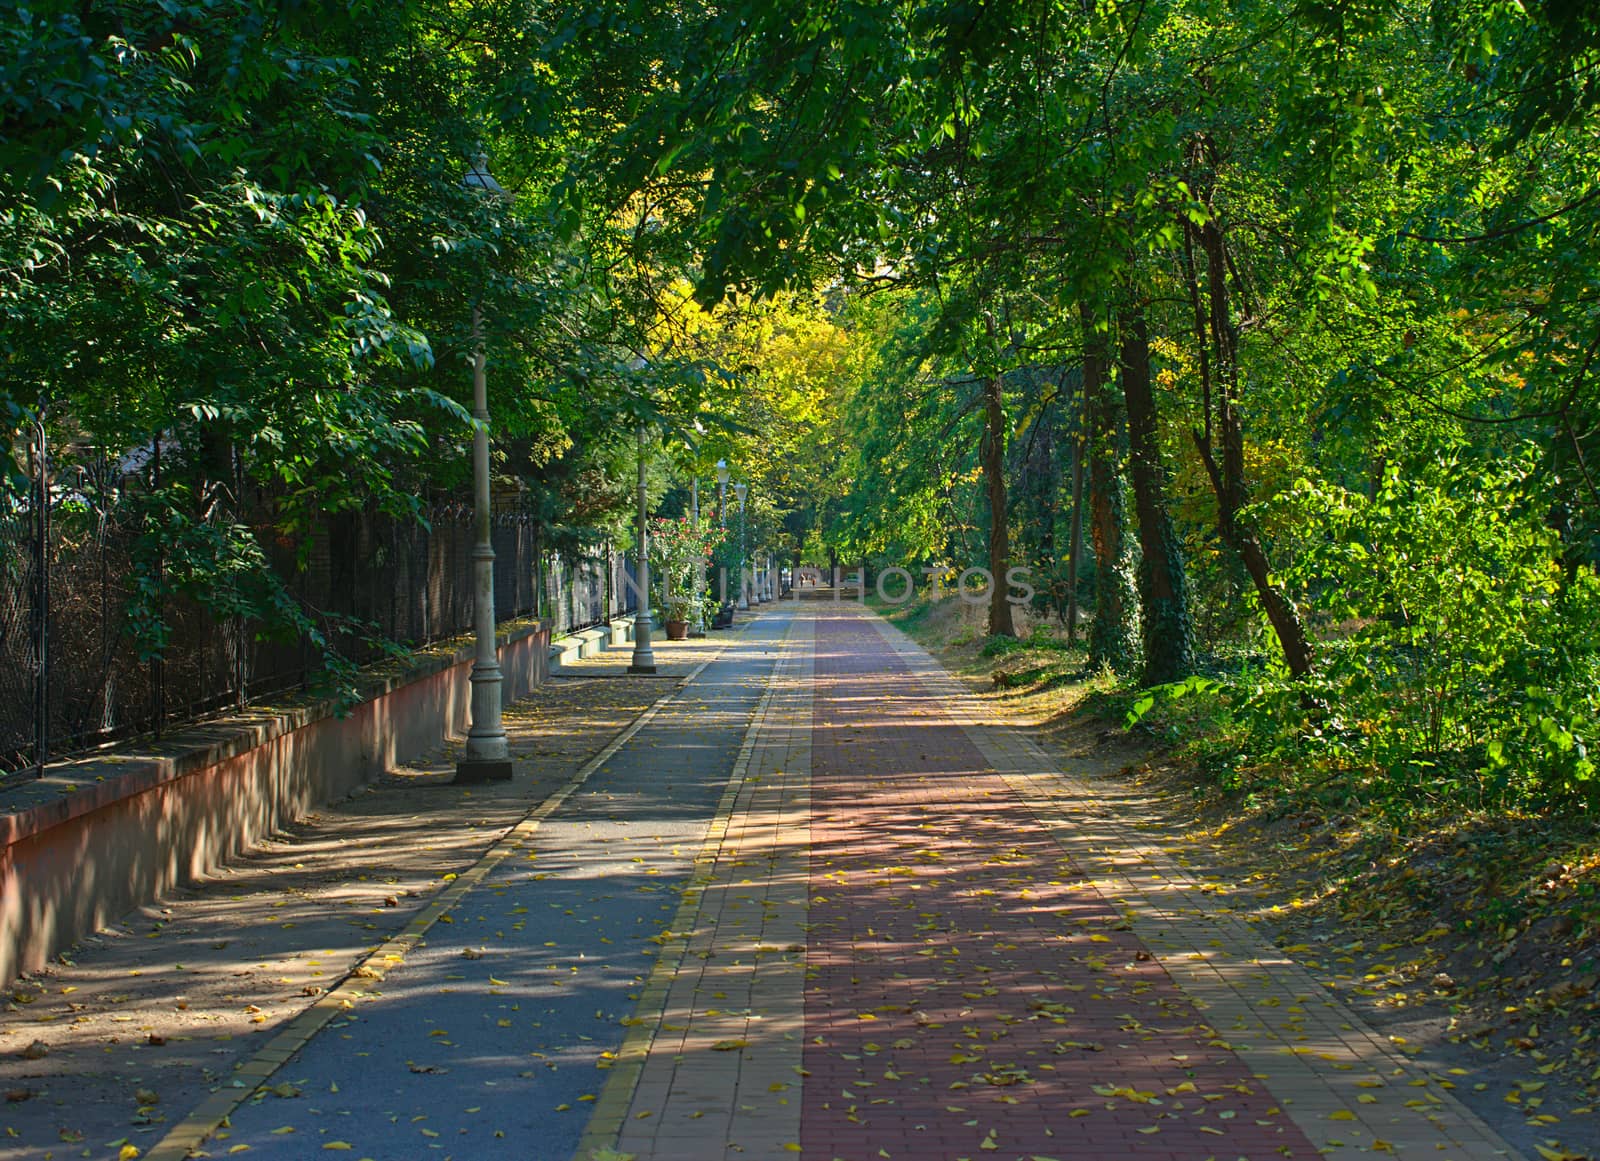 Red bricks pathway in Palic park, Serbia by sheriffkule